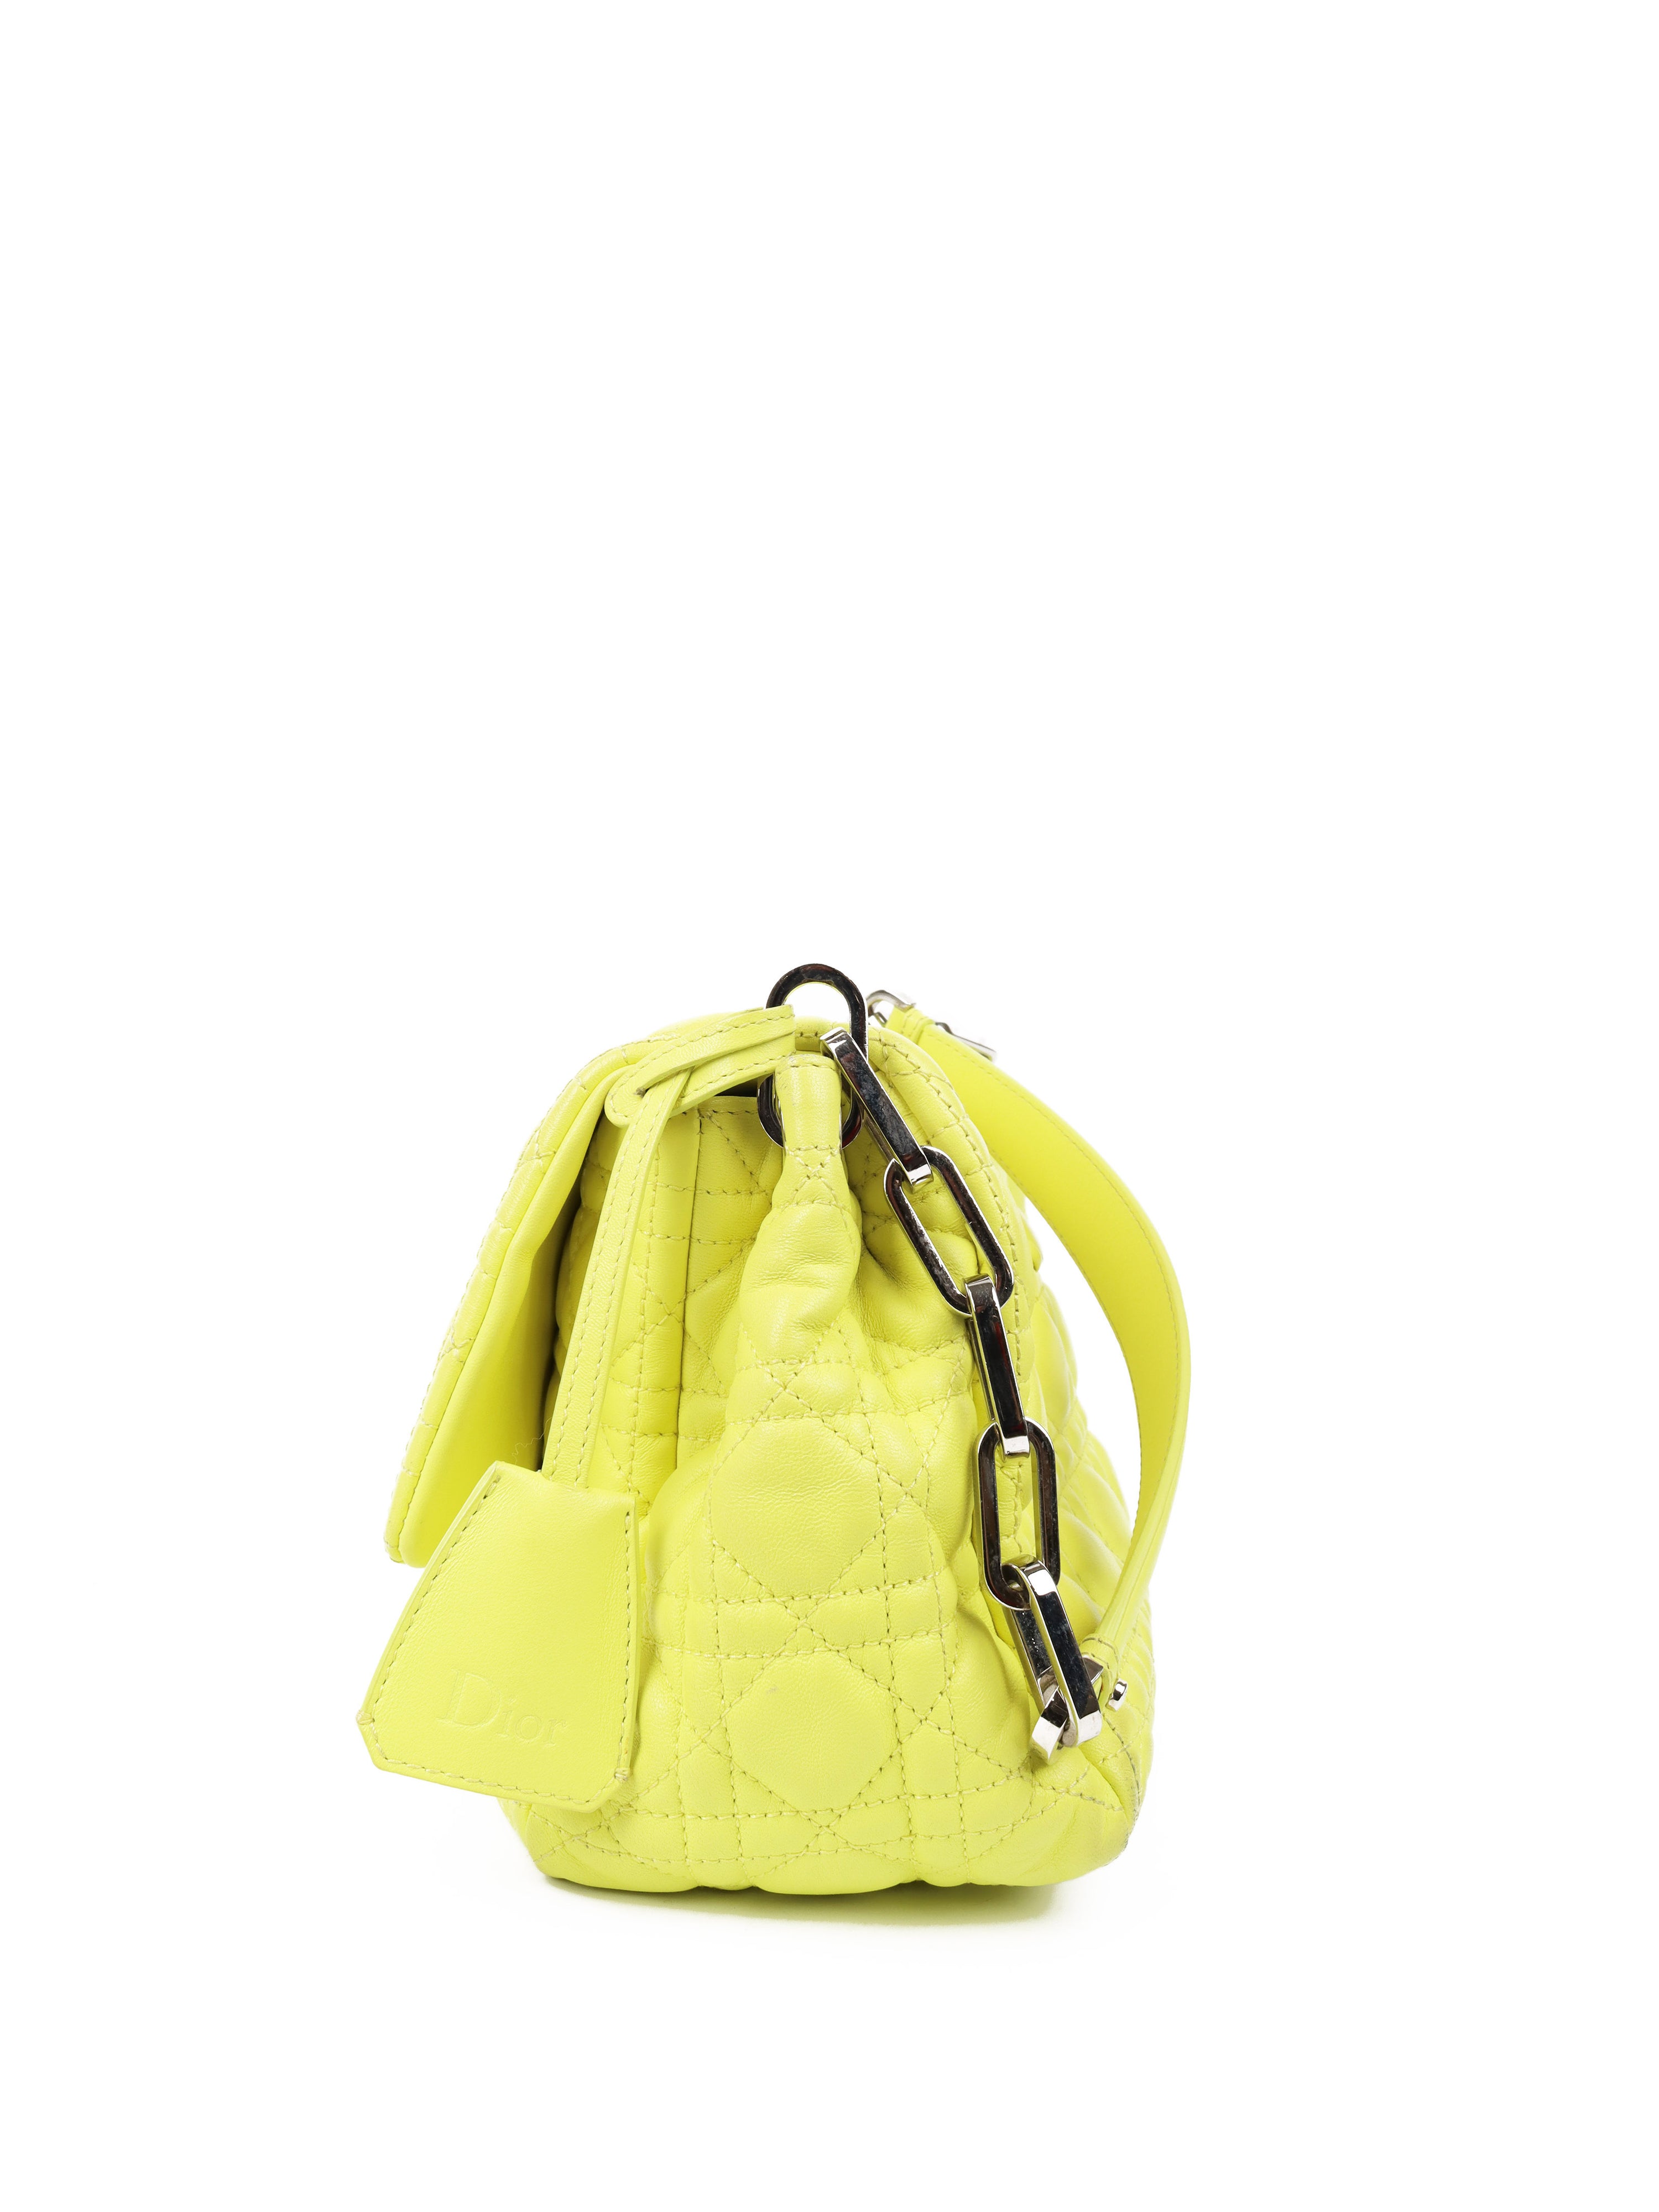 Dior Neon Yellow Miss Dior Flap Bag